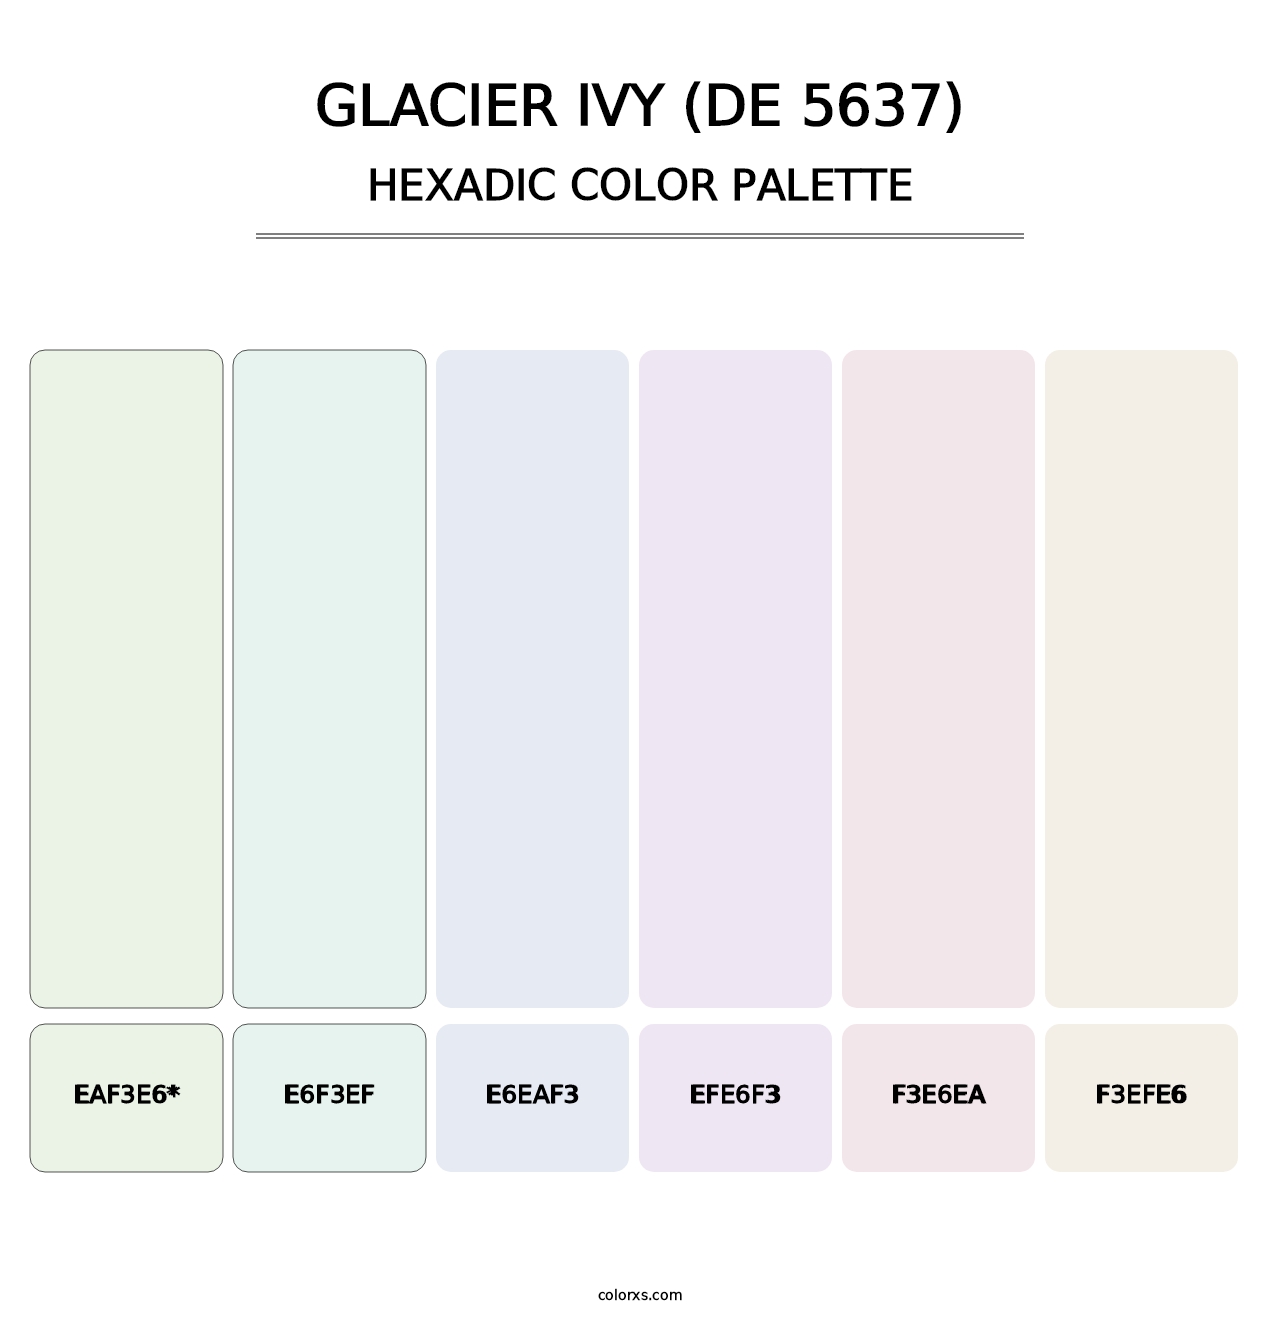 Glacier Ivy (DE 5637) - Hexadic Color Palette